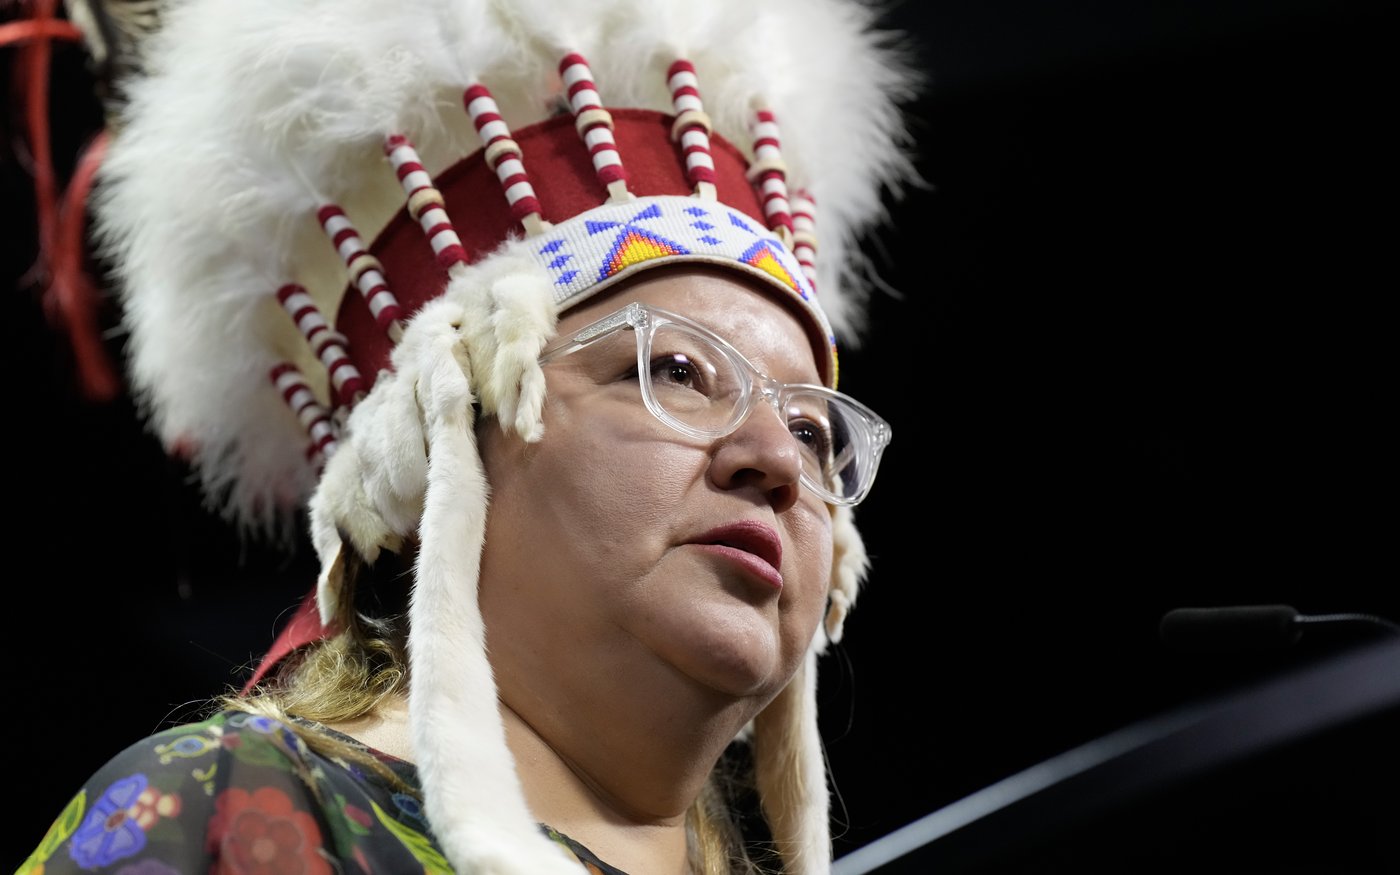 Femmes autochtones disparues: la cheffe de l’APN déplore le peu de progrès